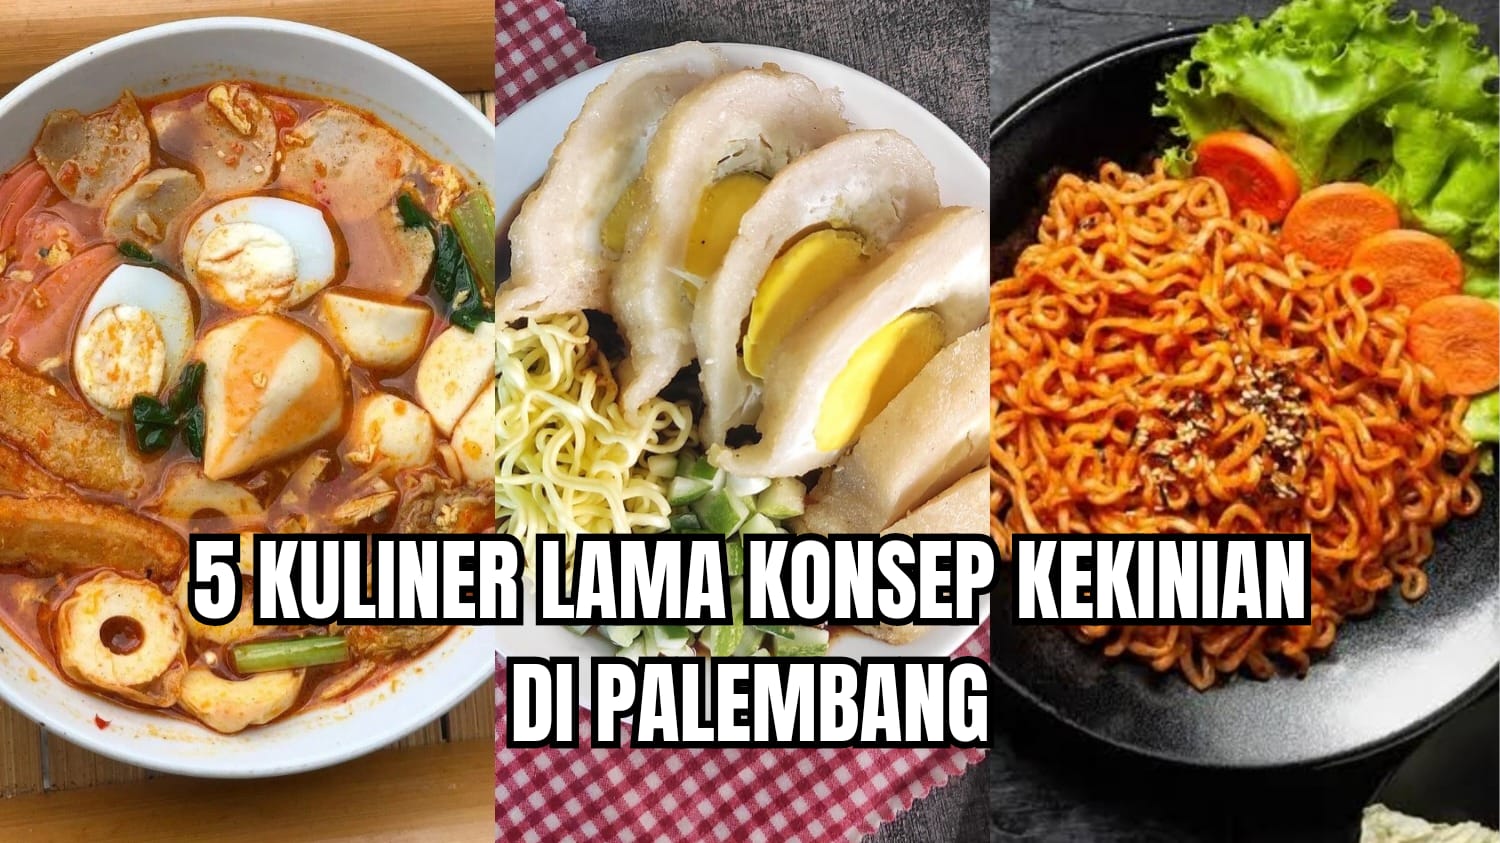 5 Tempat Kuliner Legendaris Konsep Kekinian di Palembang, Cocok untuk Tempat Nongkrong!